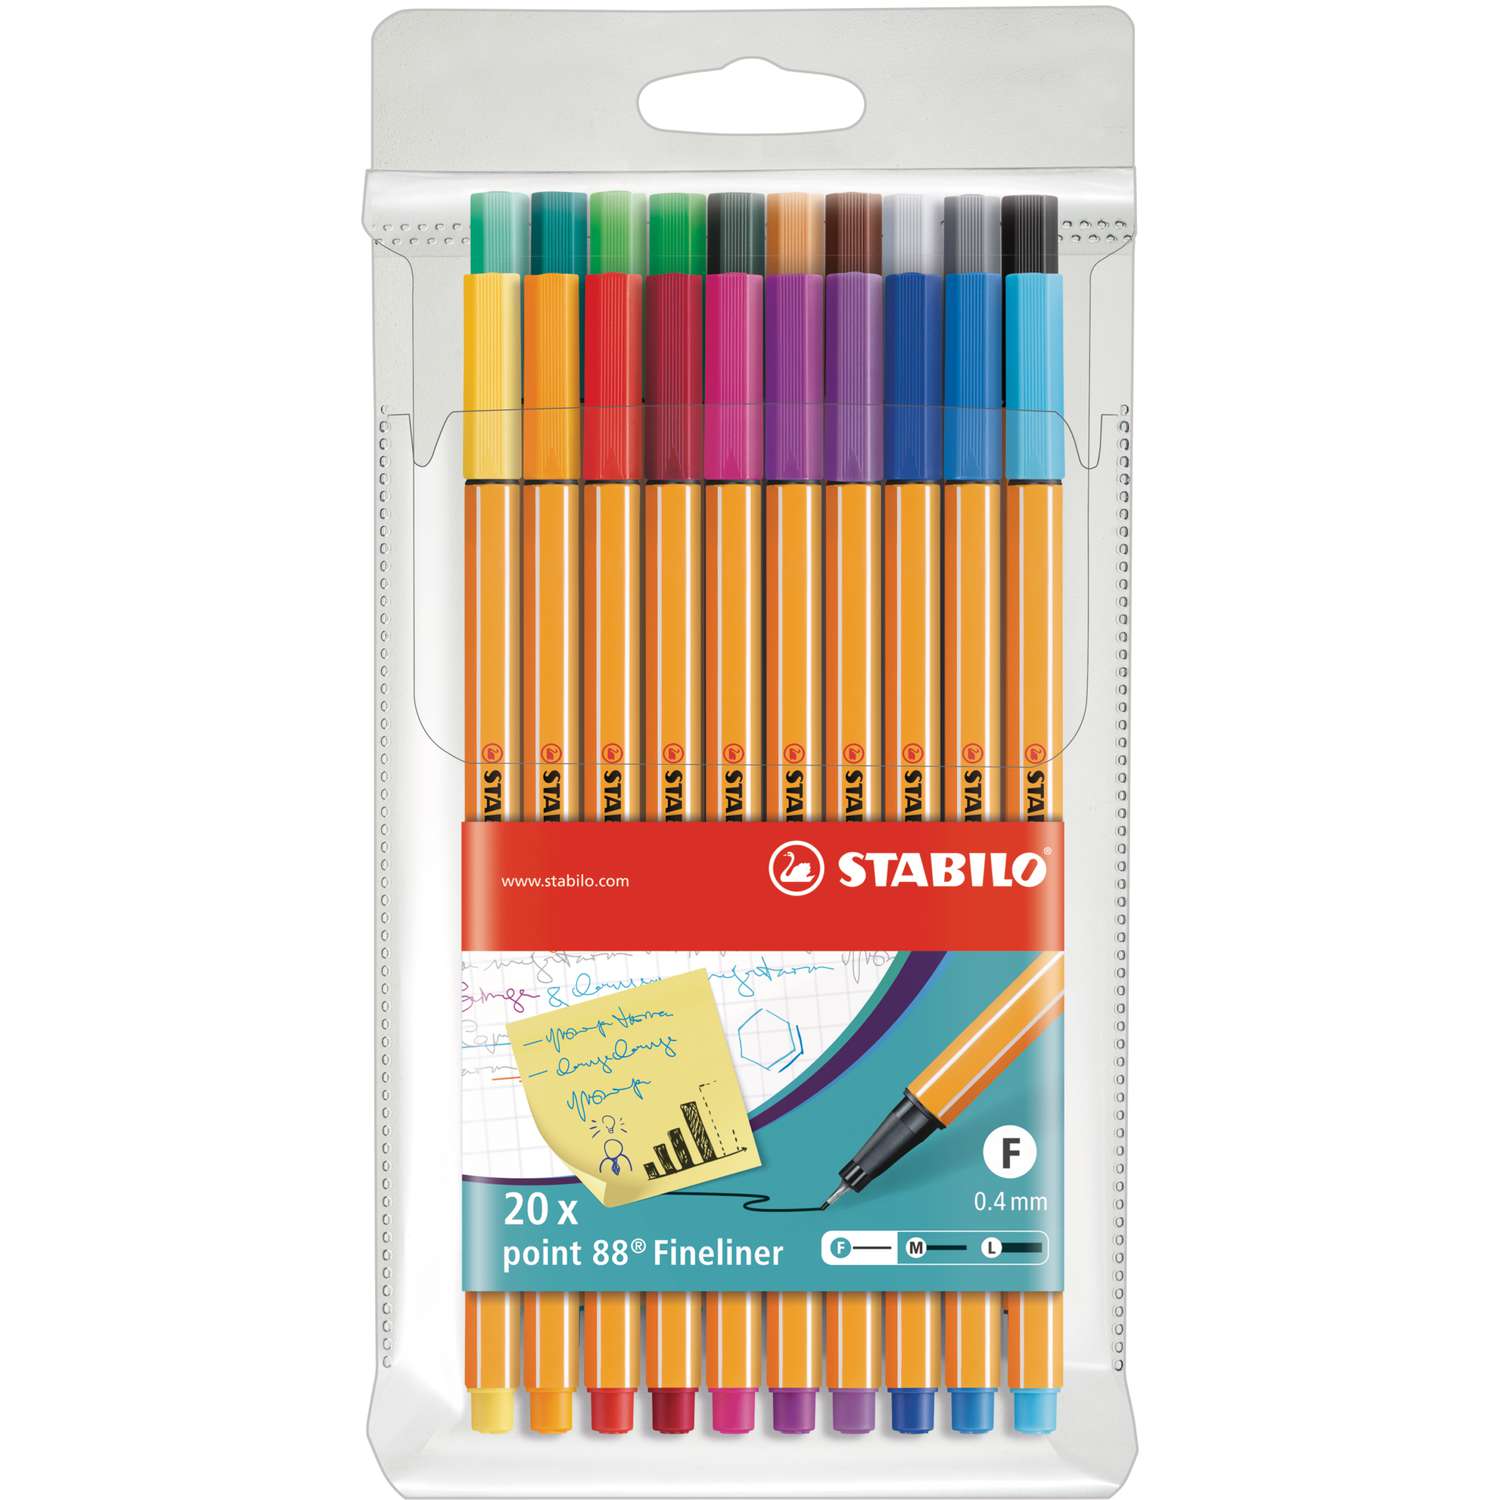 Stabilo Point 88 Fineliner Pen Sets, 50,000+ Art Supplies